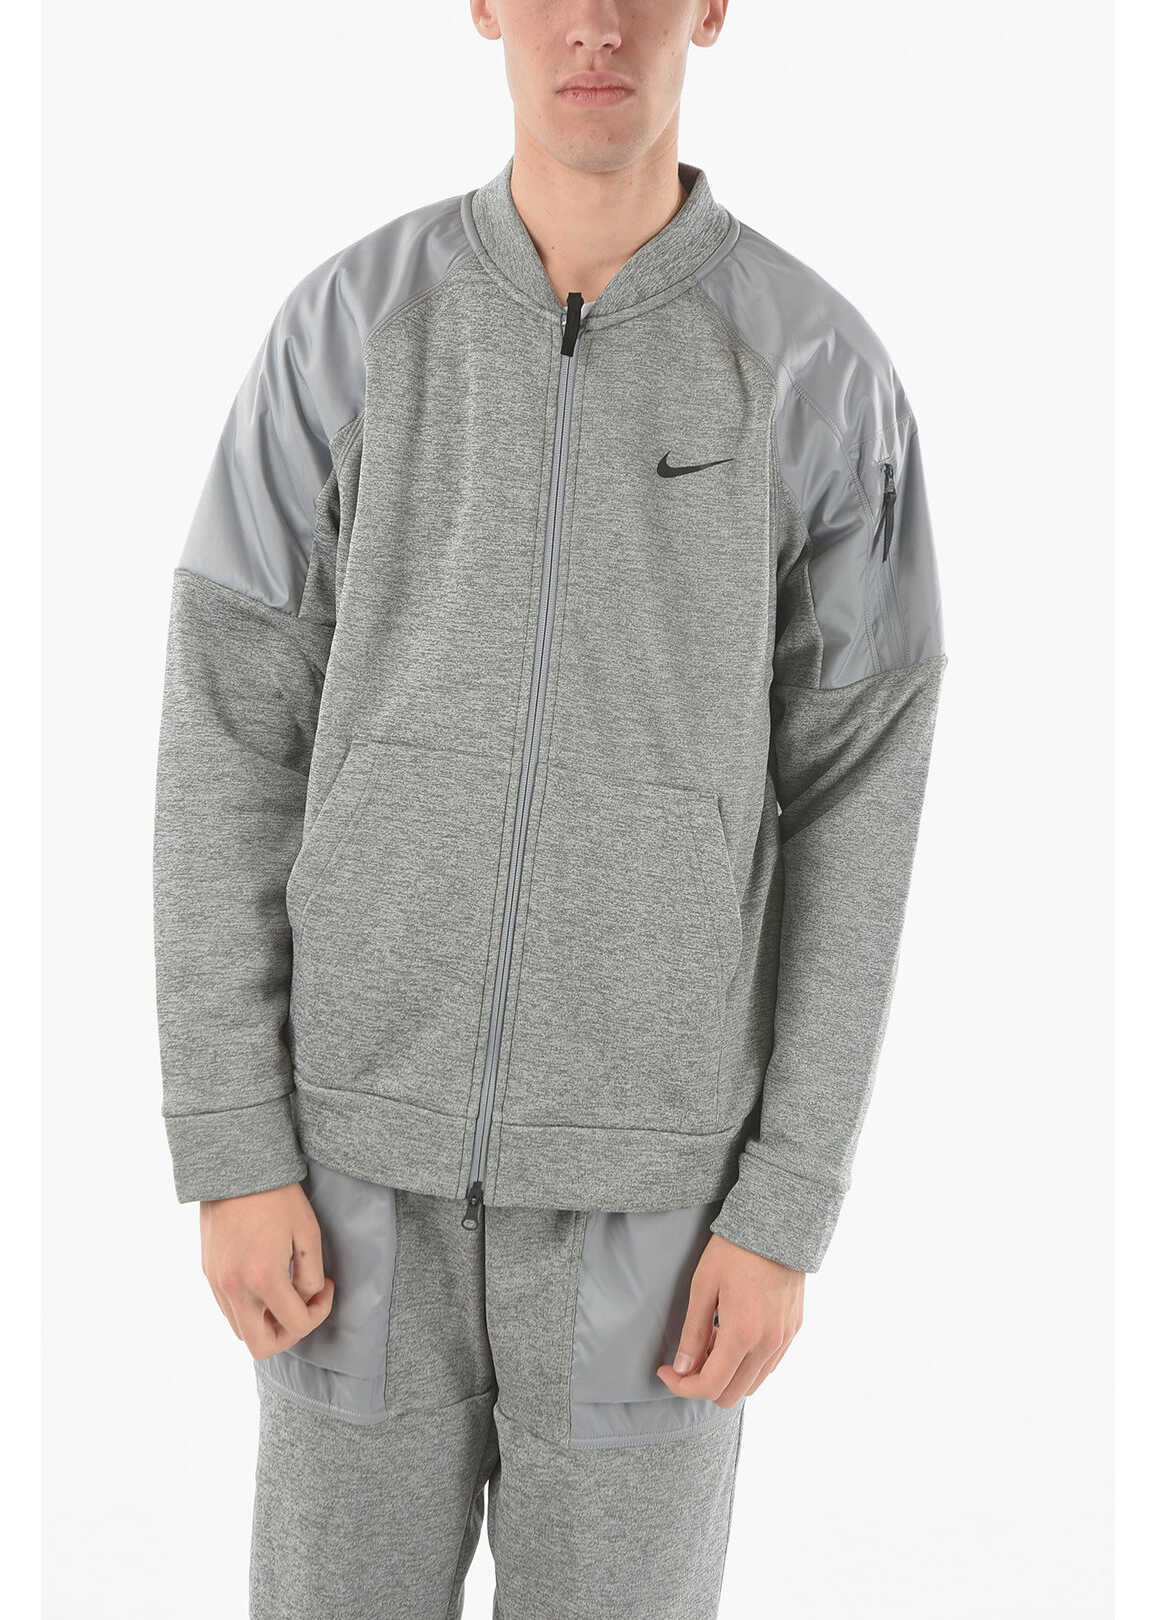 Nike Zip Closure Therma-Fit Novelty Sweatshirt With Nylon Inserts Gray